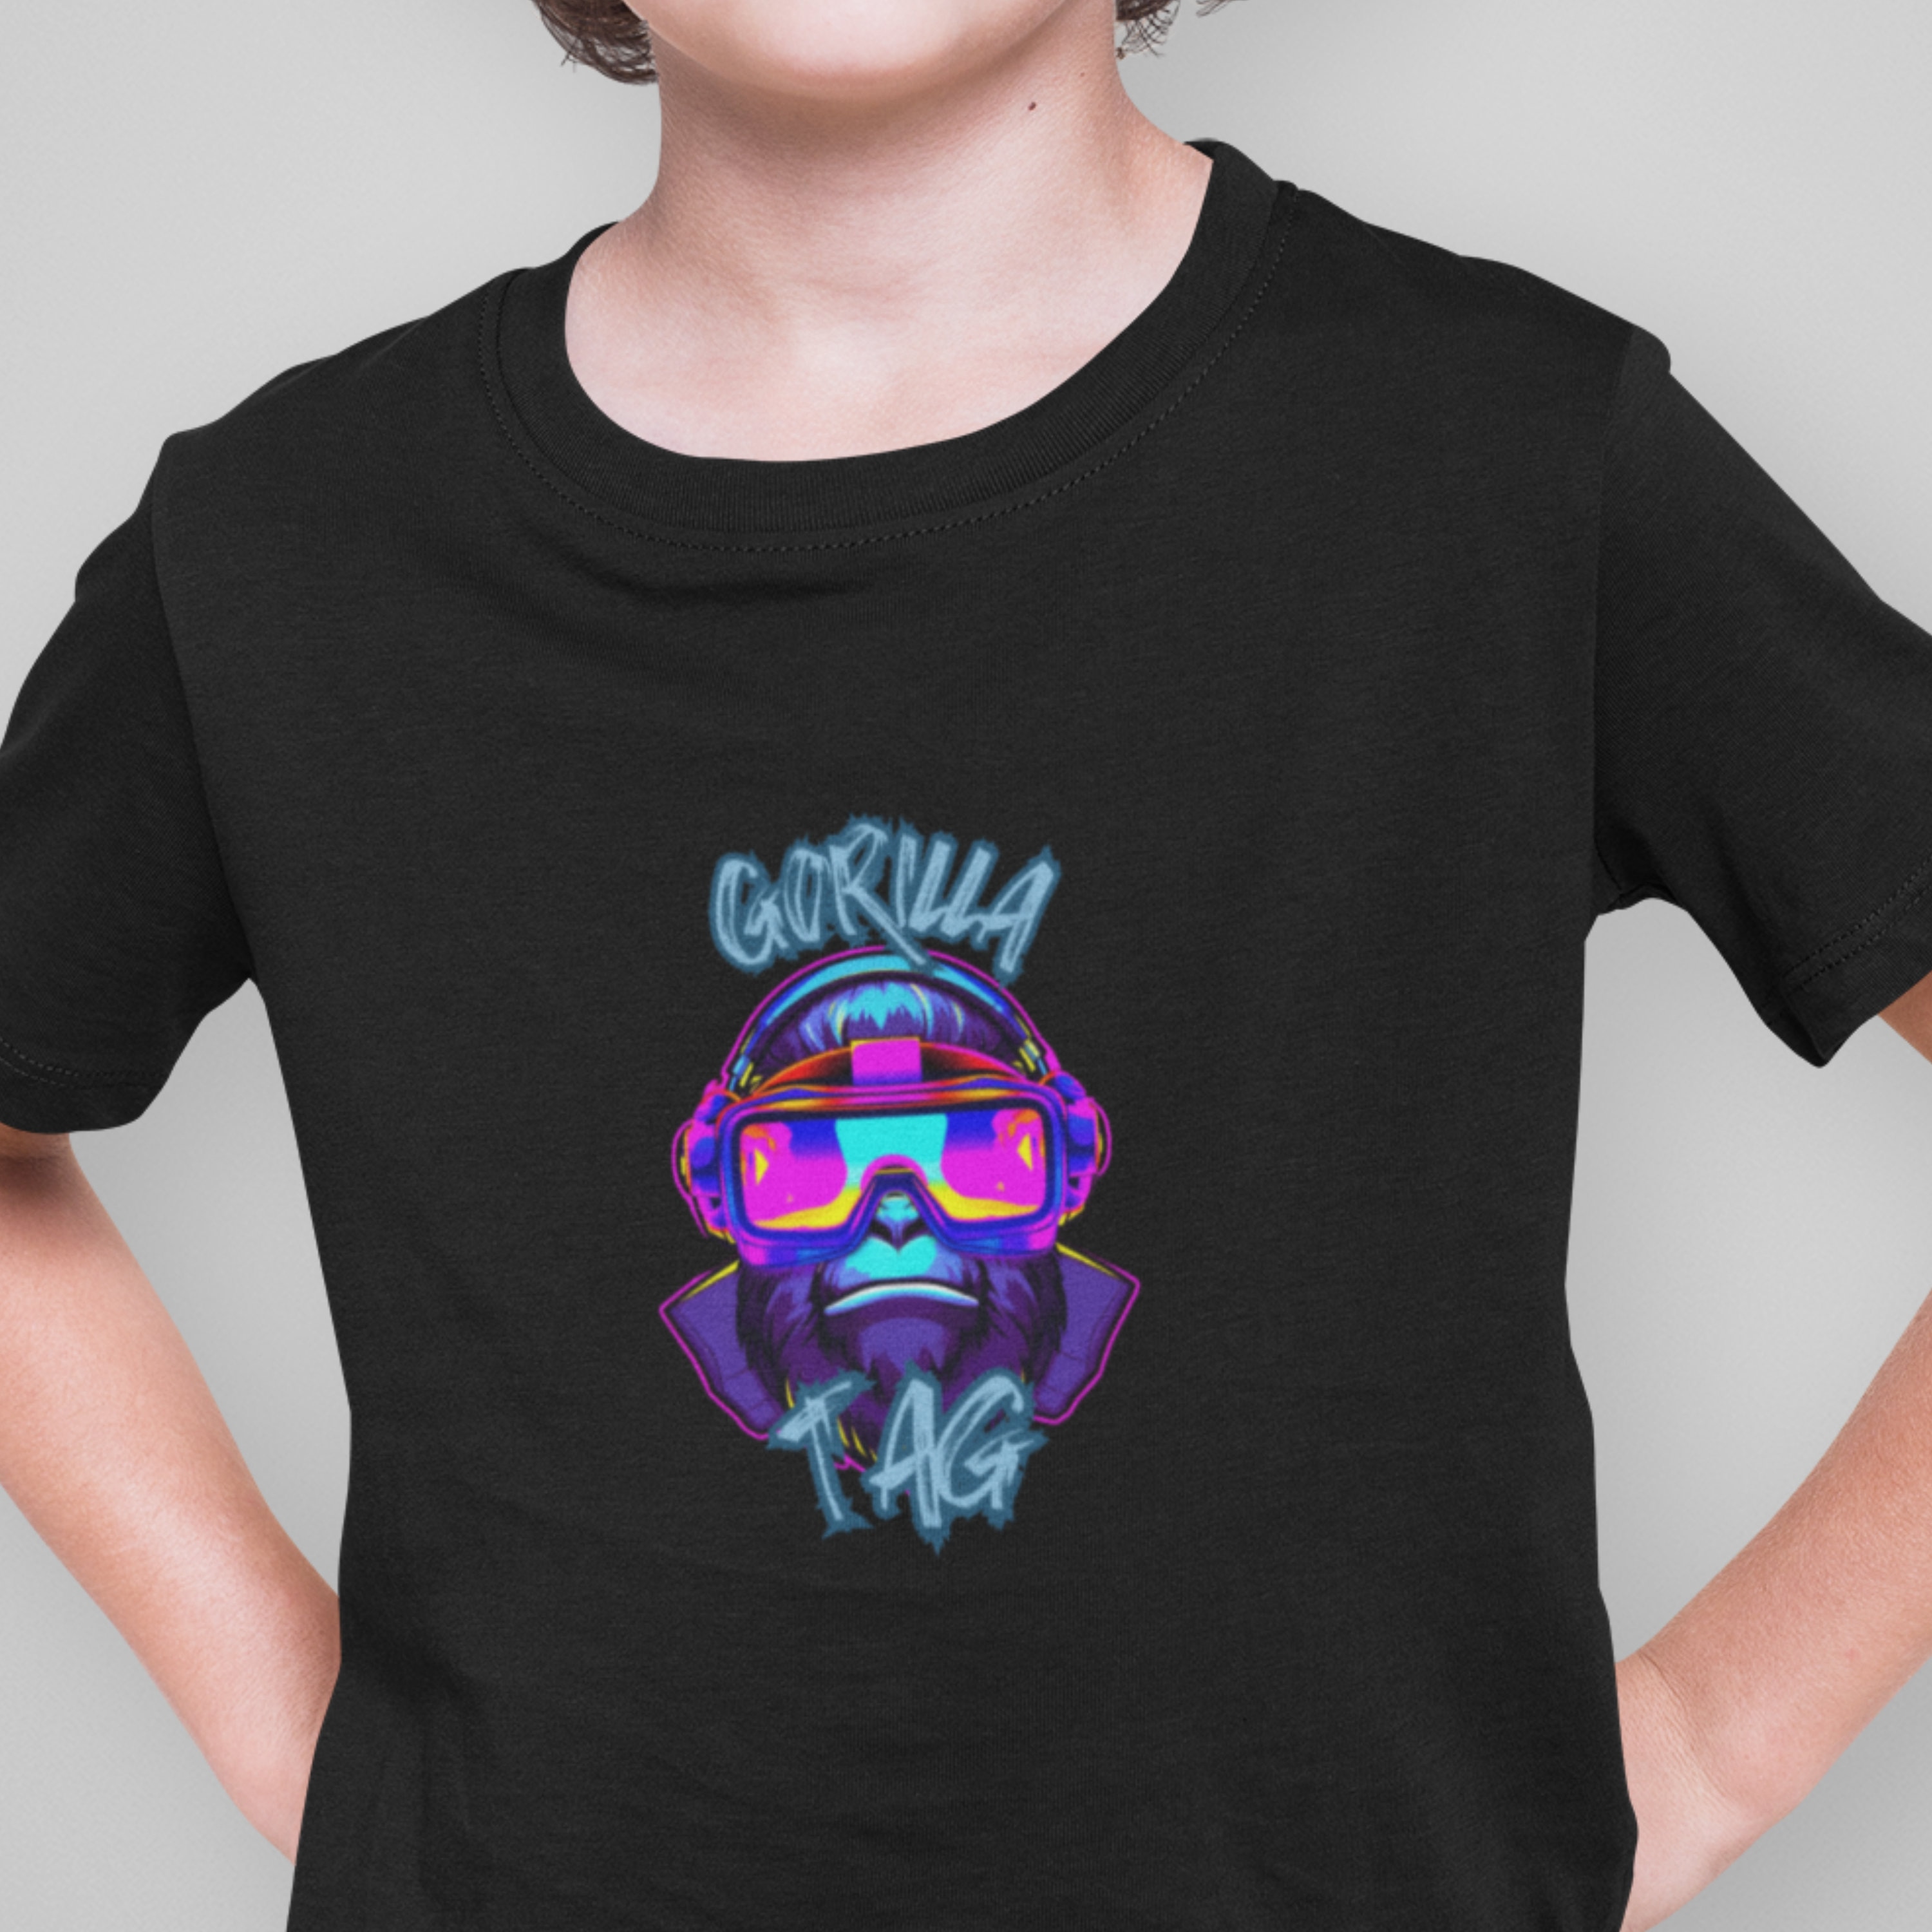 Gorilla Tag Merch for Kids VR Gamer Tee Adult Teens Digital - Inspire Uplift